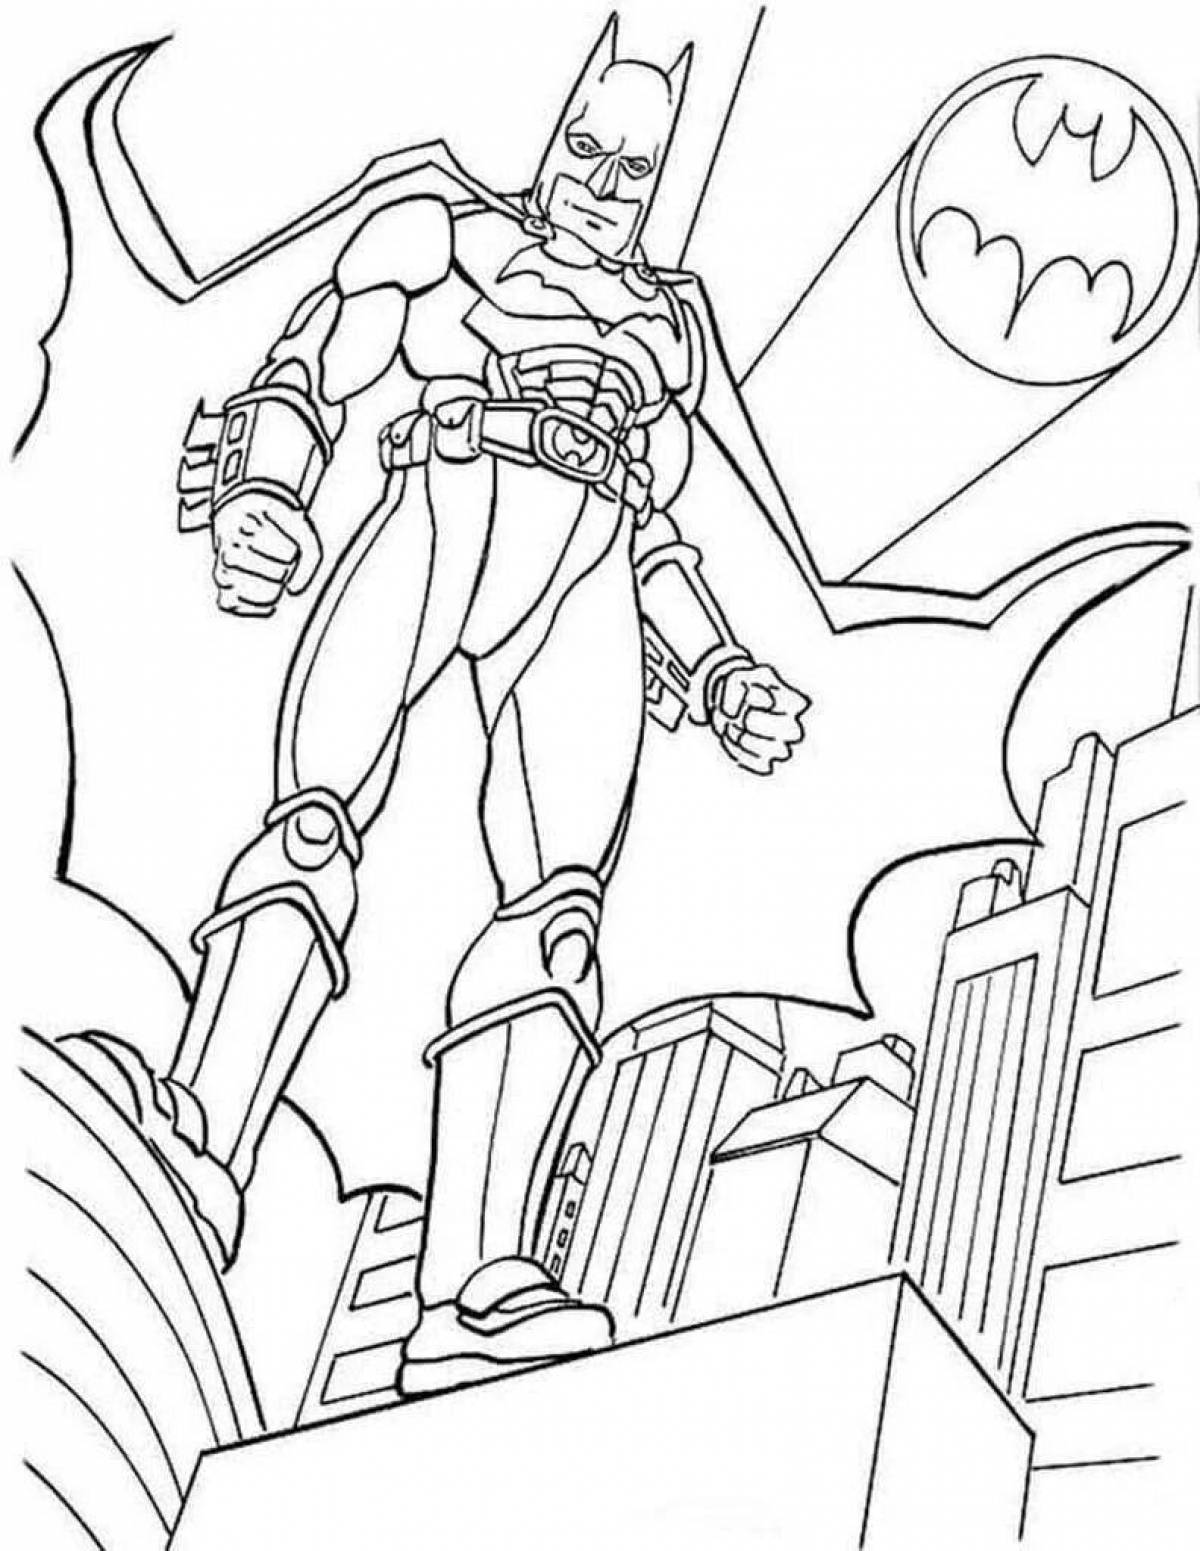 Bright batman coloring book for kids